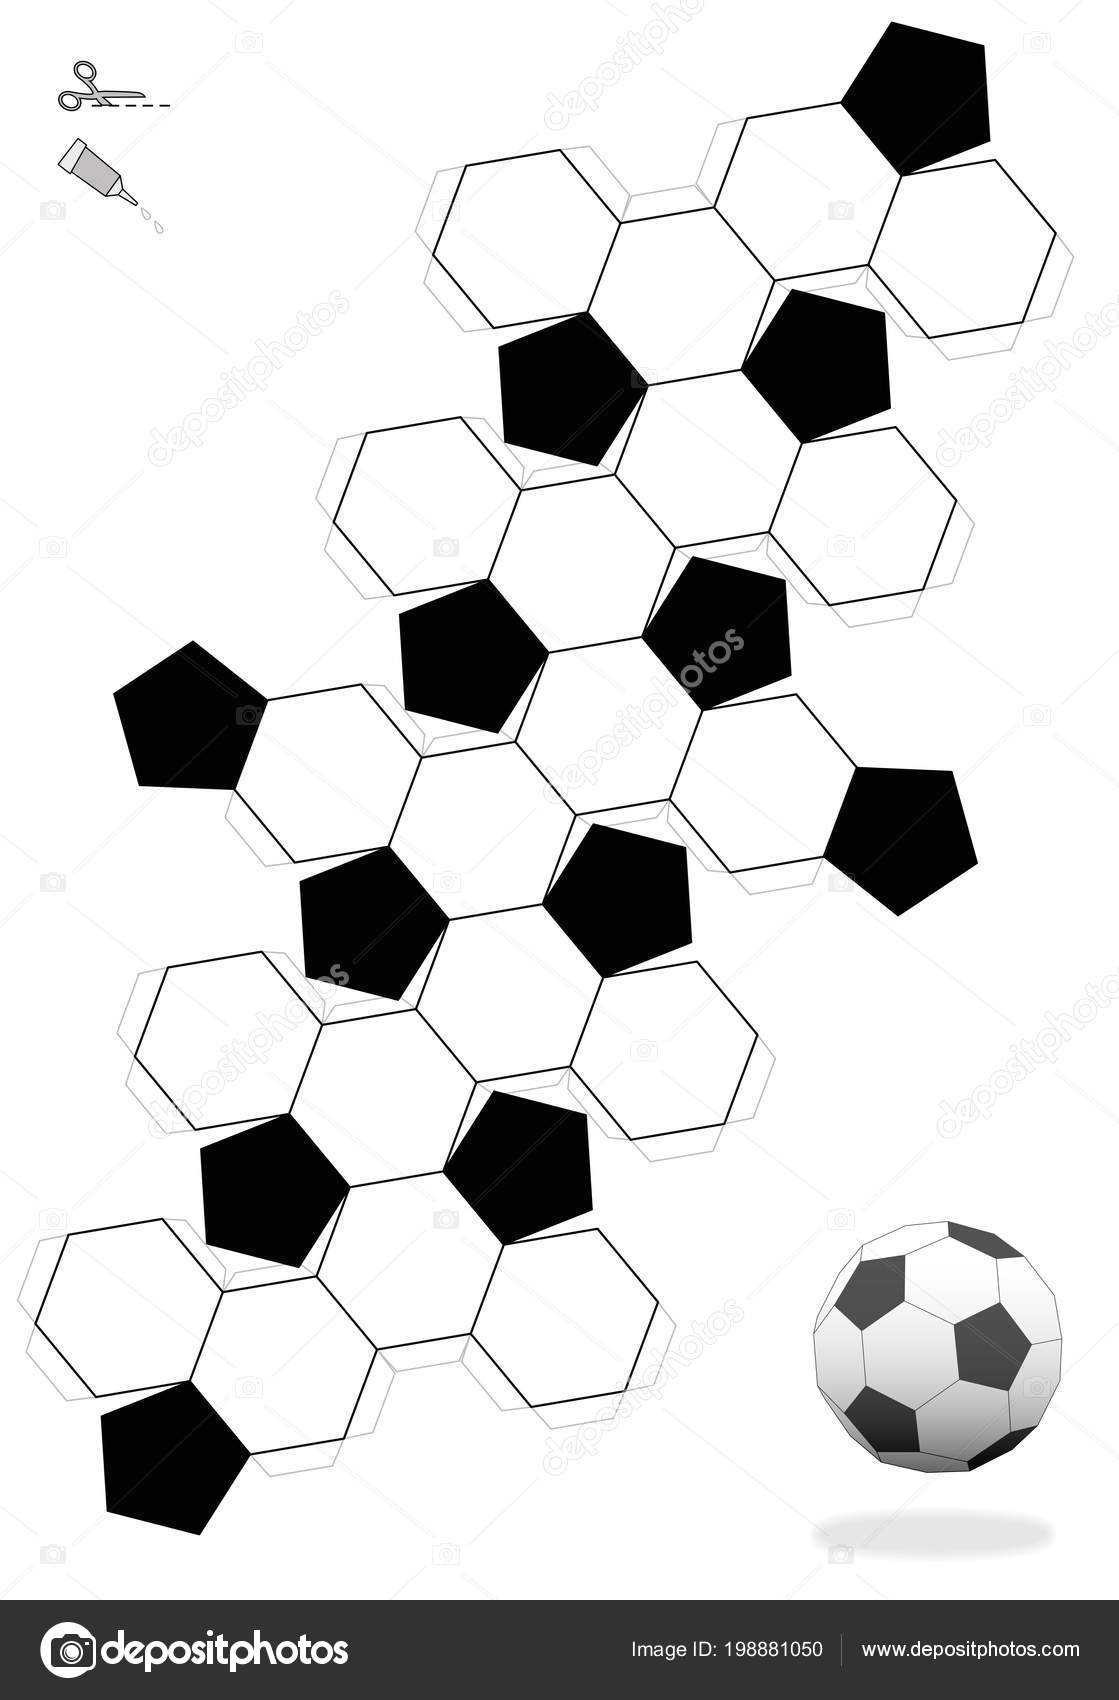 depositphotos_198881050-stock-illustration-truncated-icosahedron-soccer-ball-template.jpg